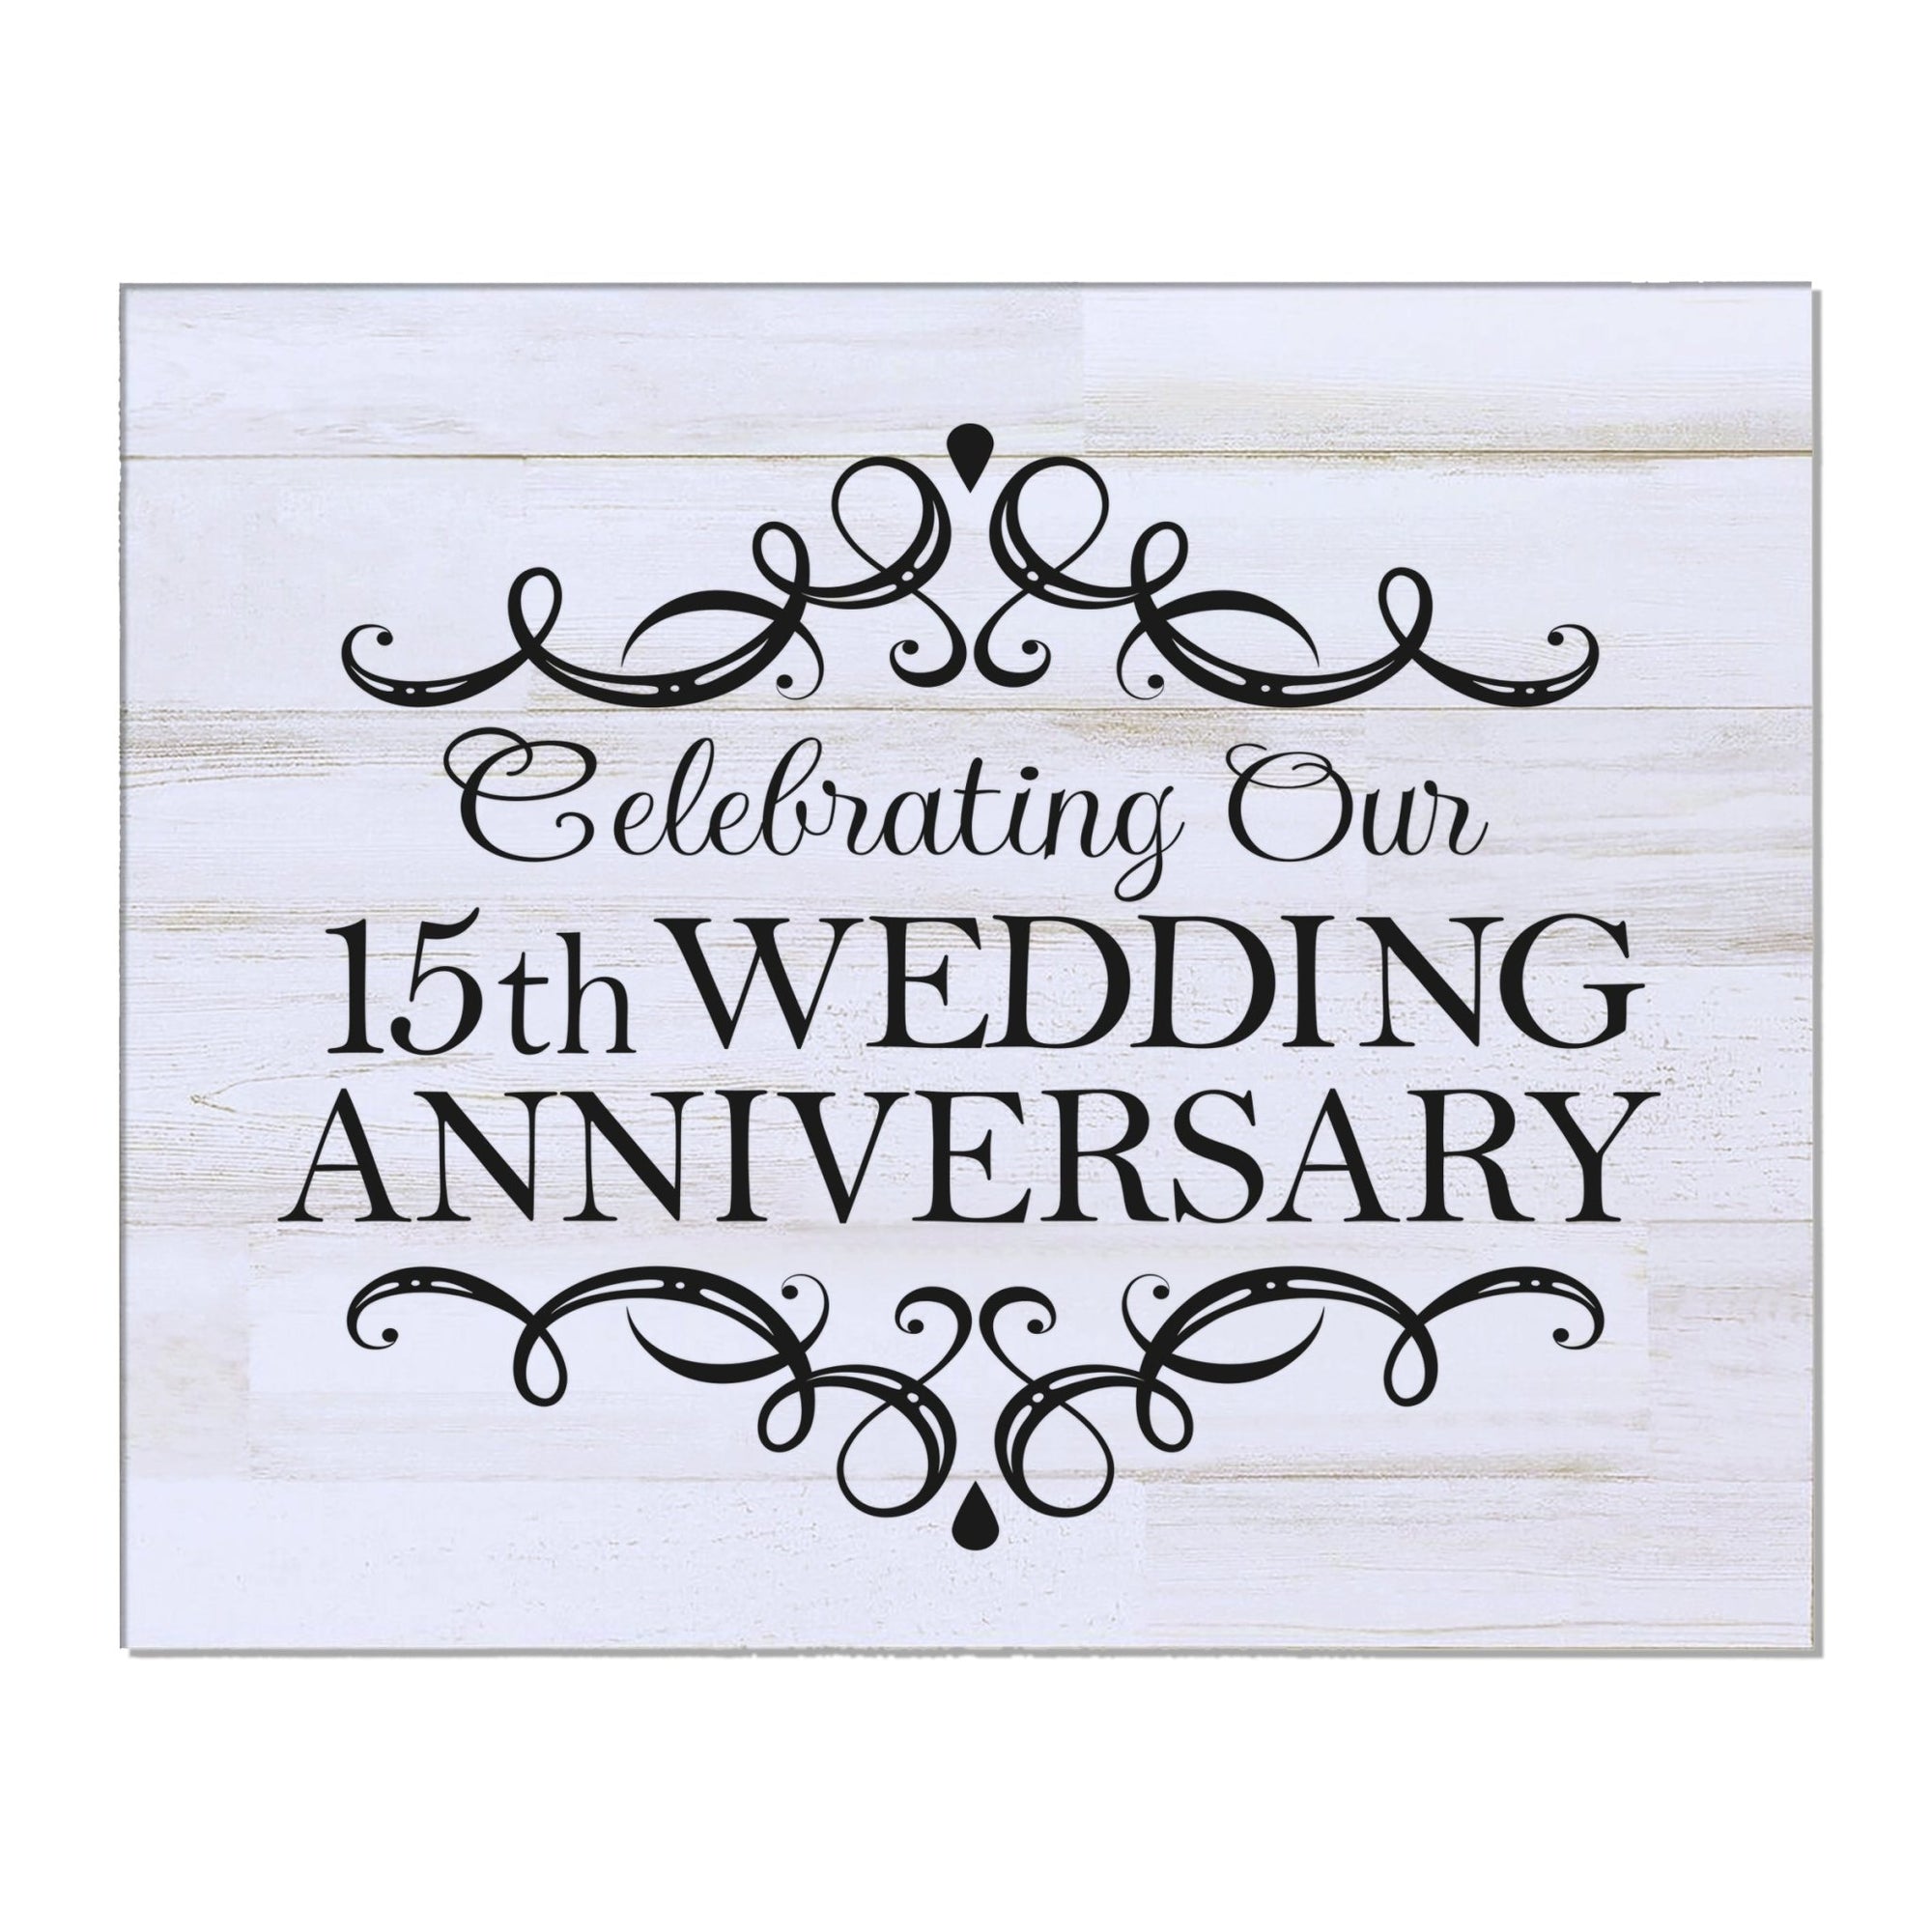 15th Wedding Anniversary Wall Plaque - Celebrating - LifeSong Milestones